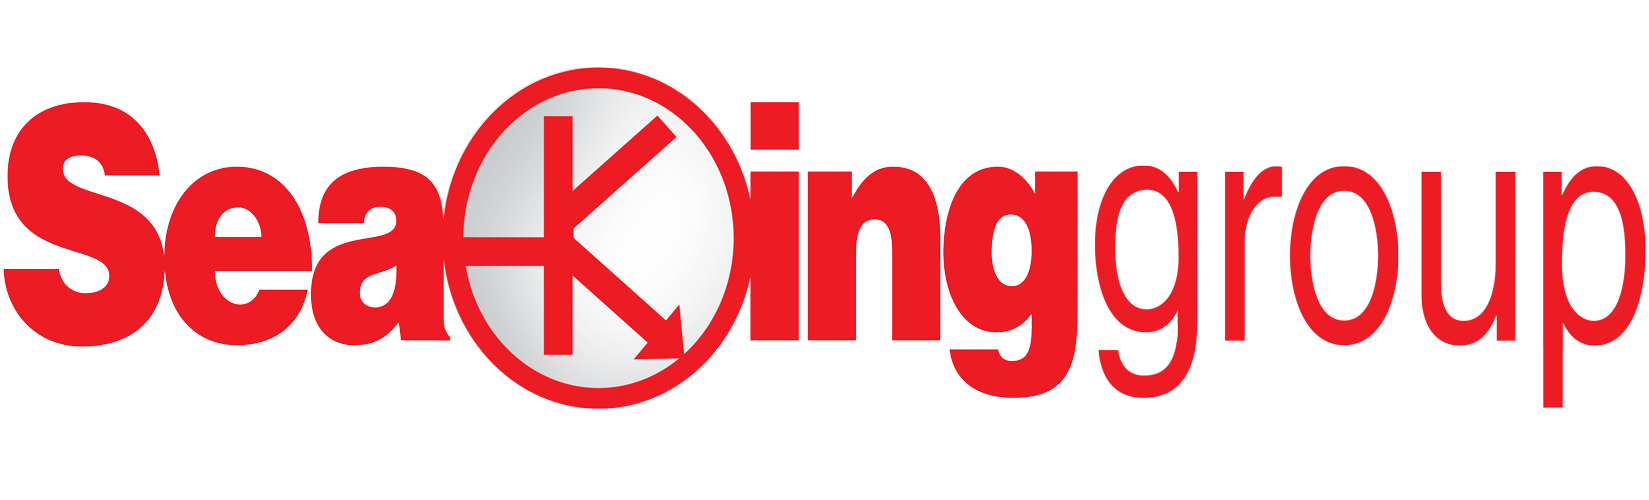 Seaking-Logo-Layers-NEW-2016-no-glow1.png